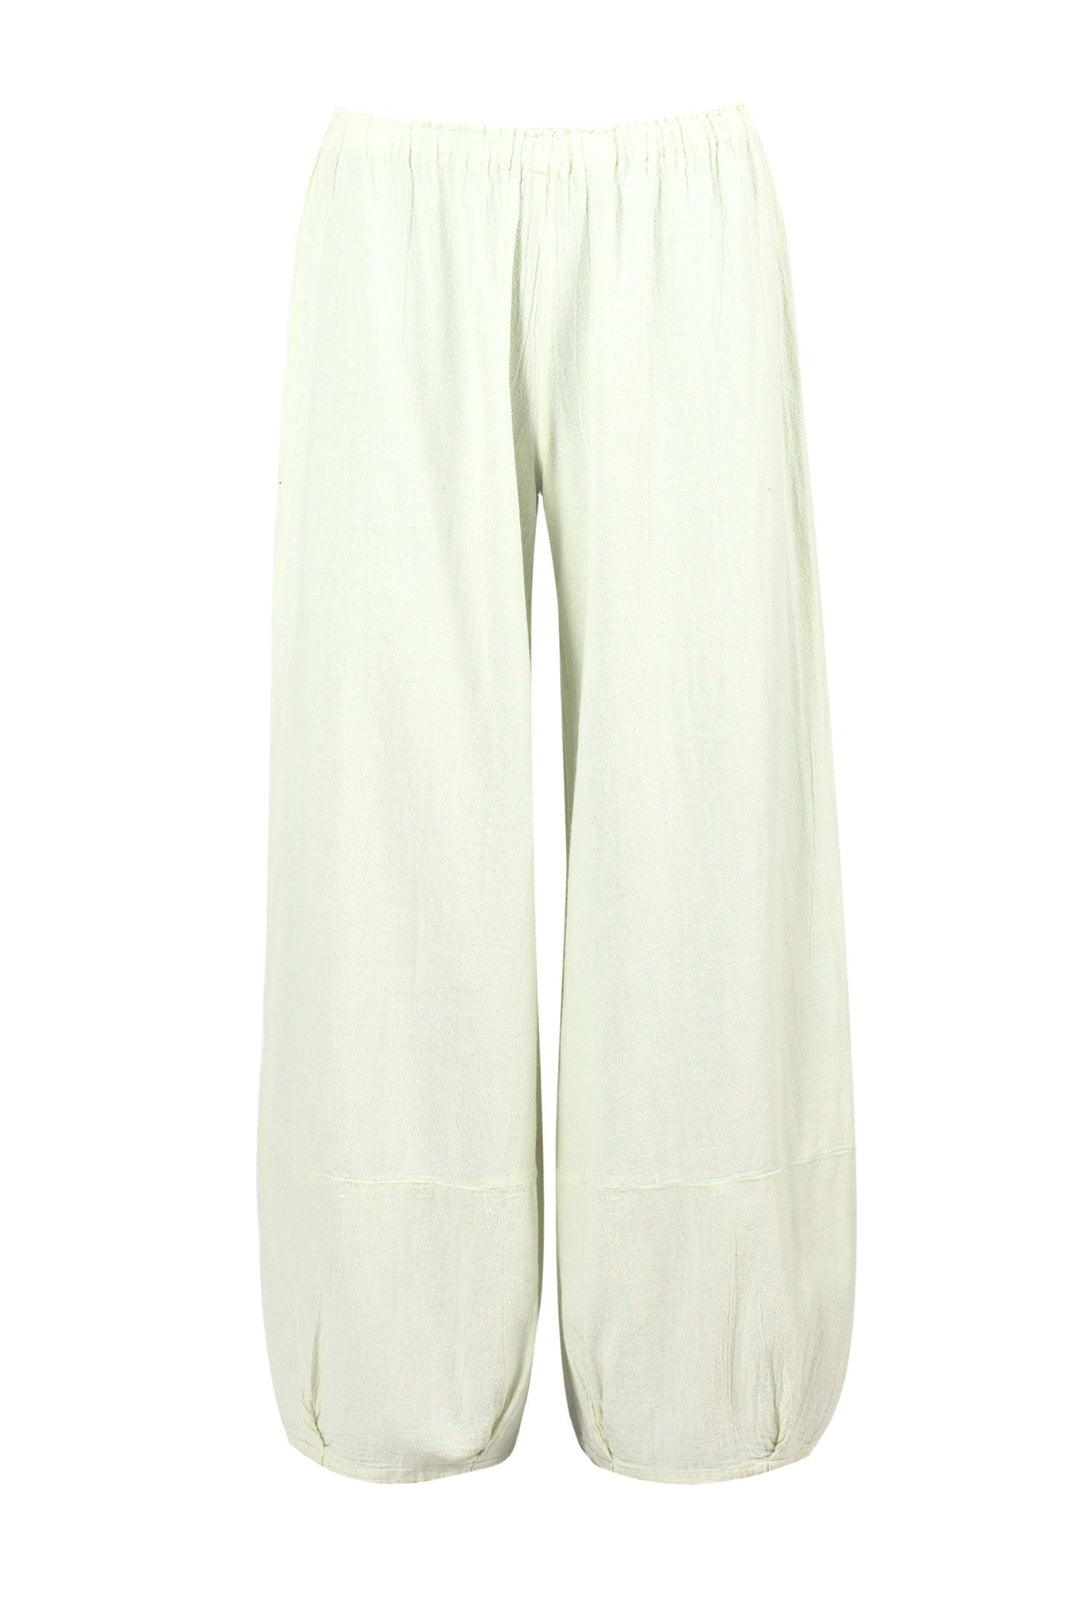 Onelife P468 Savannah Snow White 100% Cotton Pants